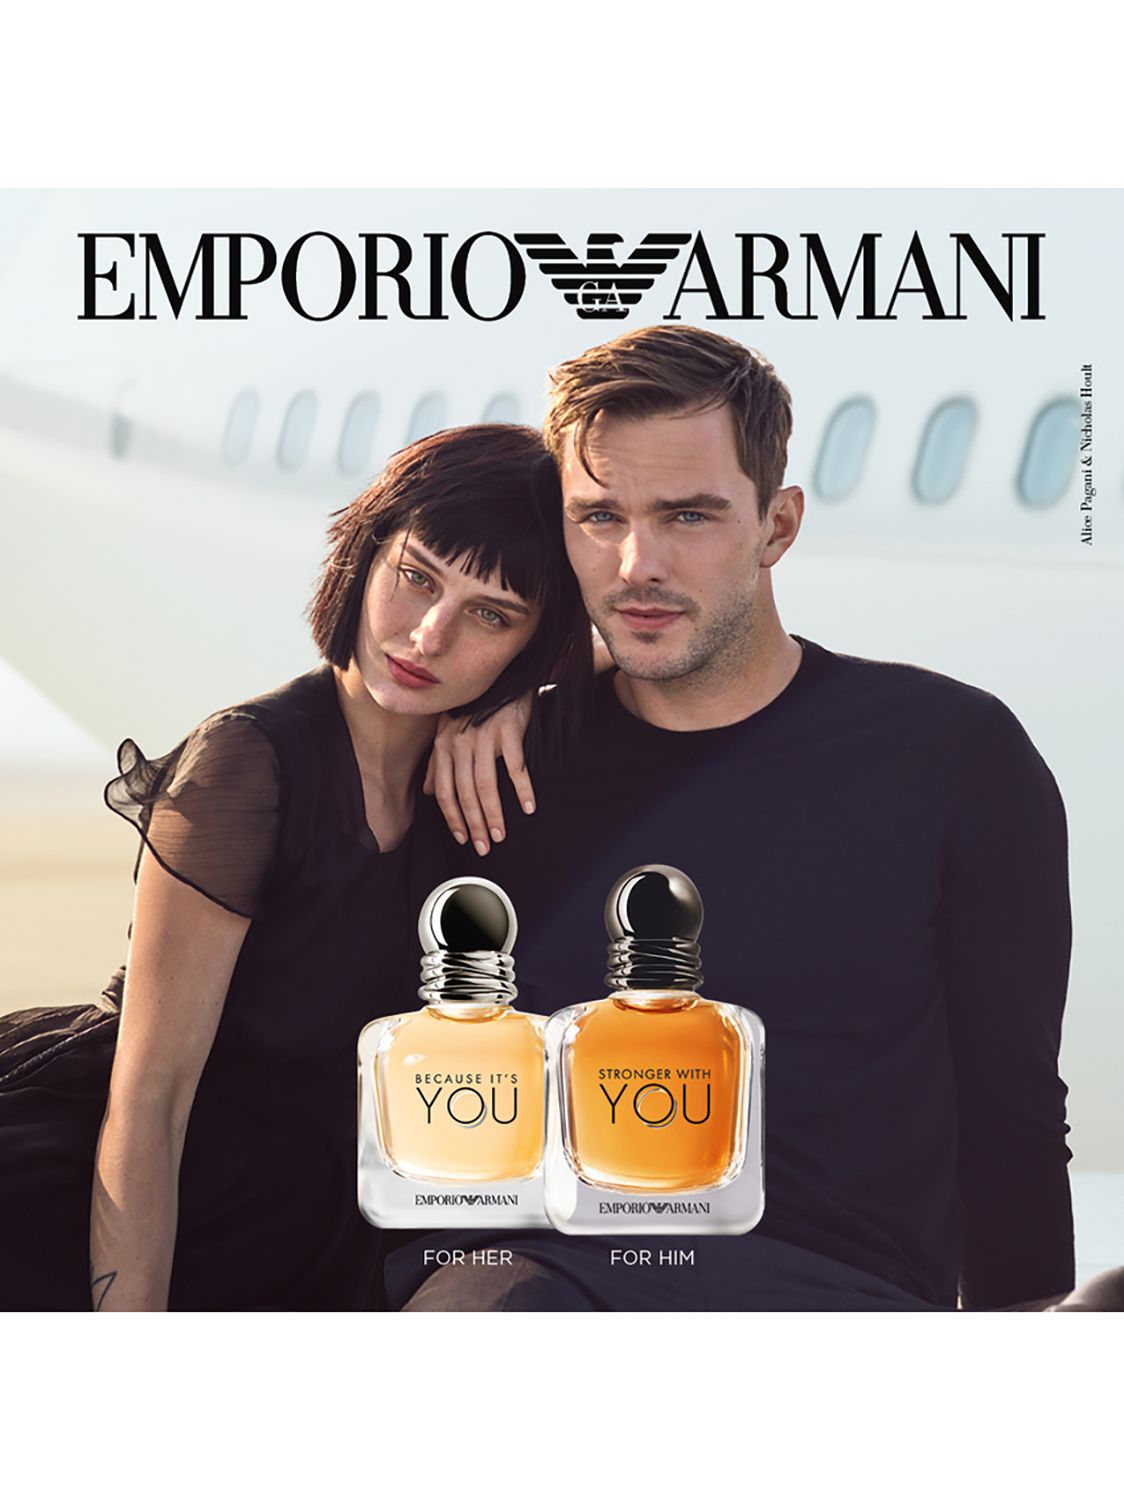  Emporio Armani Because It's You Eau De Parfum 3.4 Ounce / 100  ml : Beauty & Personal Care